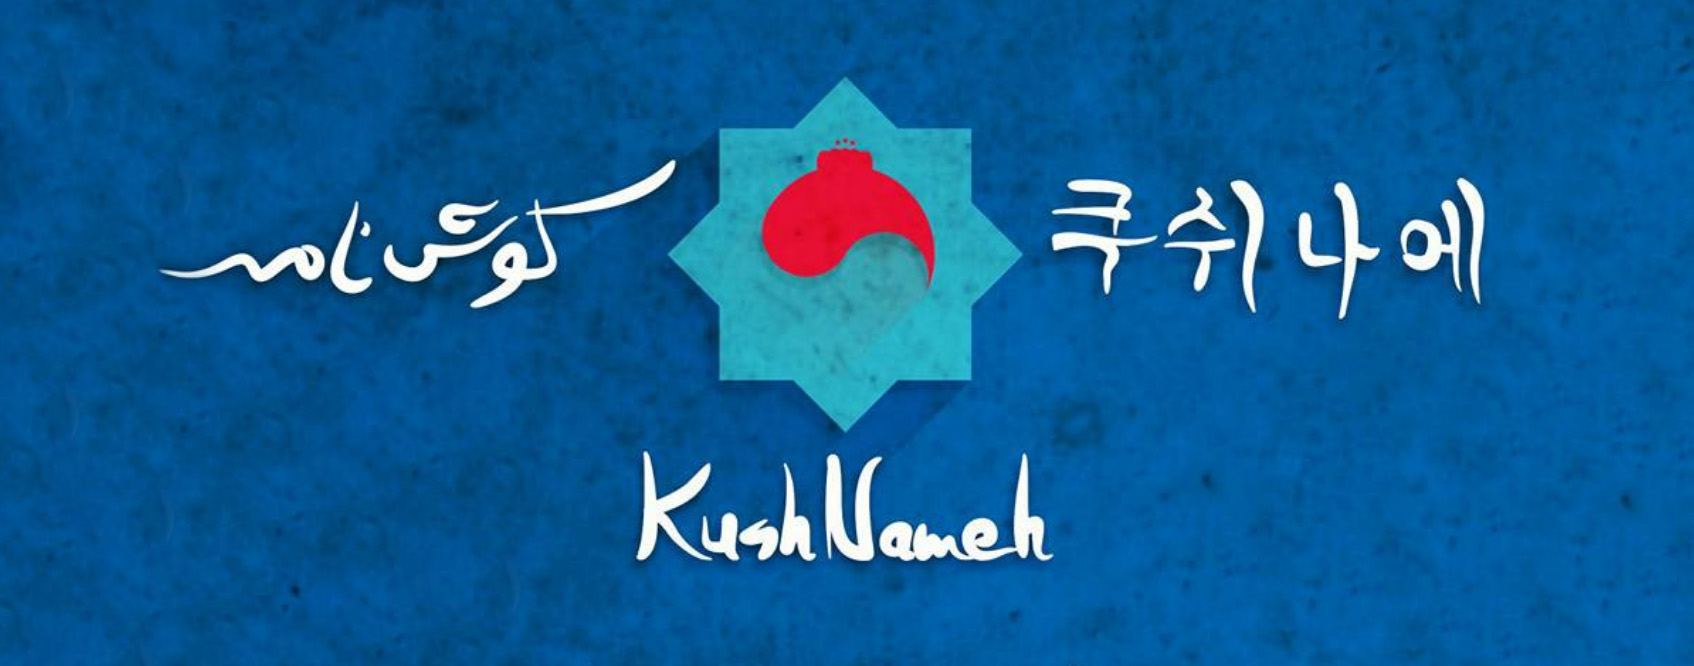 Kushnameh | Ancient Persian epic poem and love story